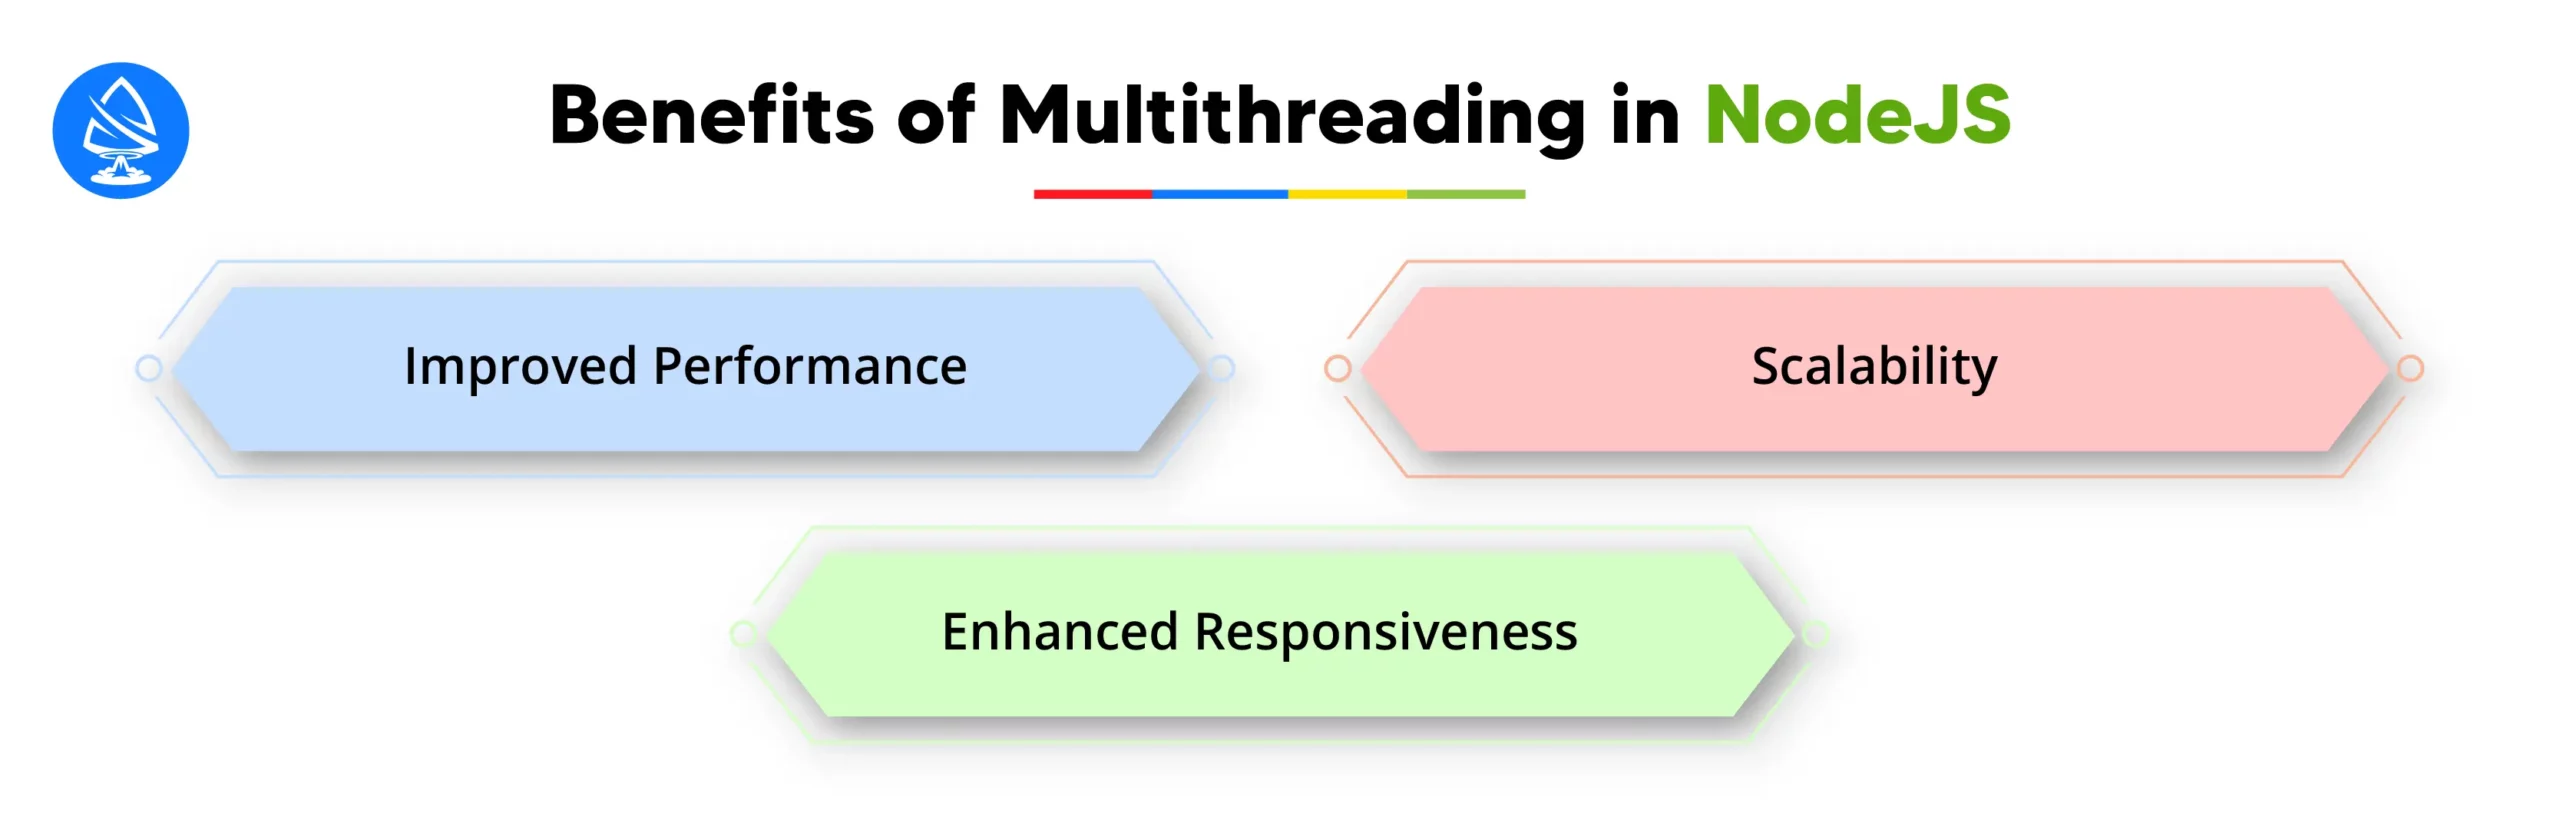 Benefits of Multithreading 